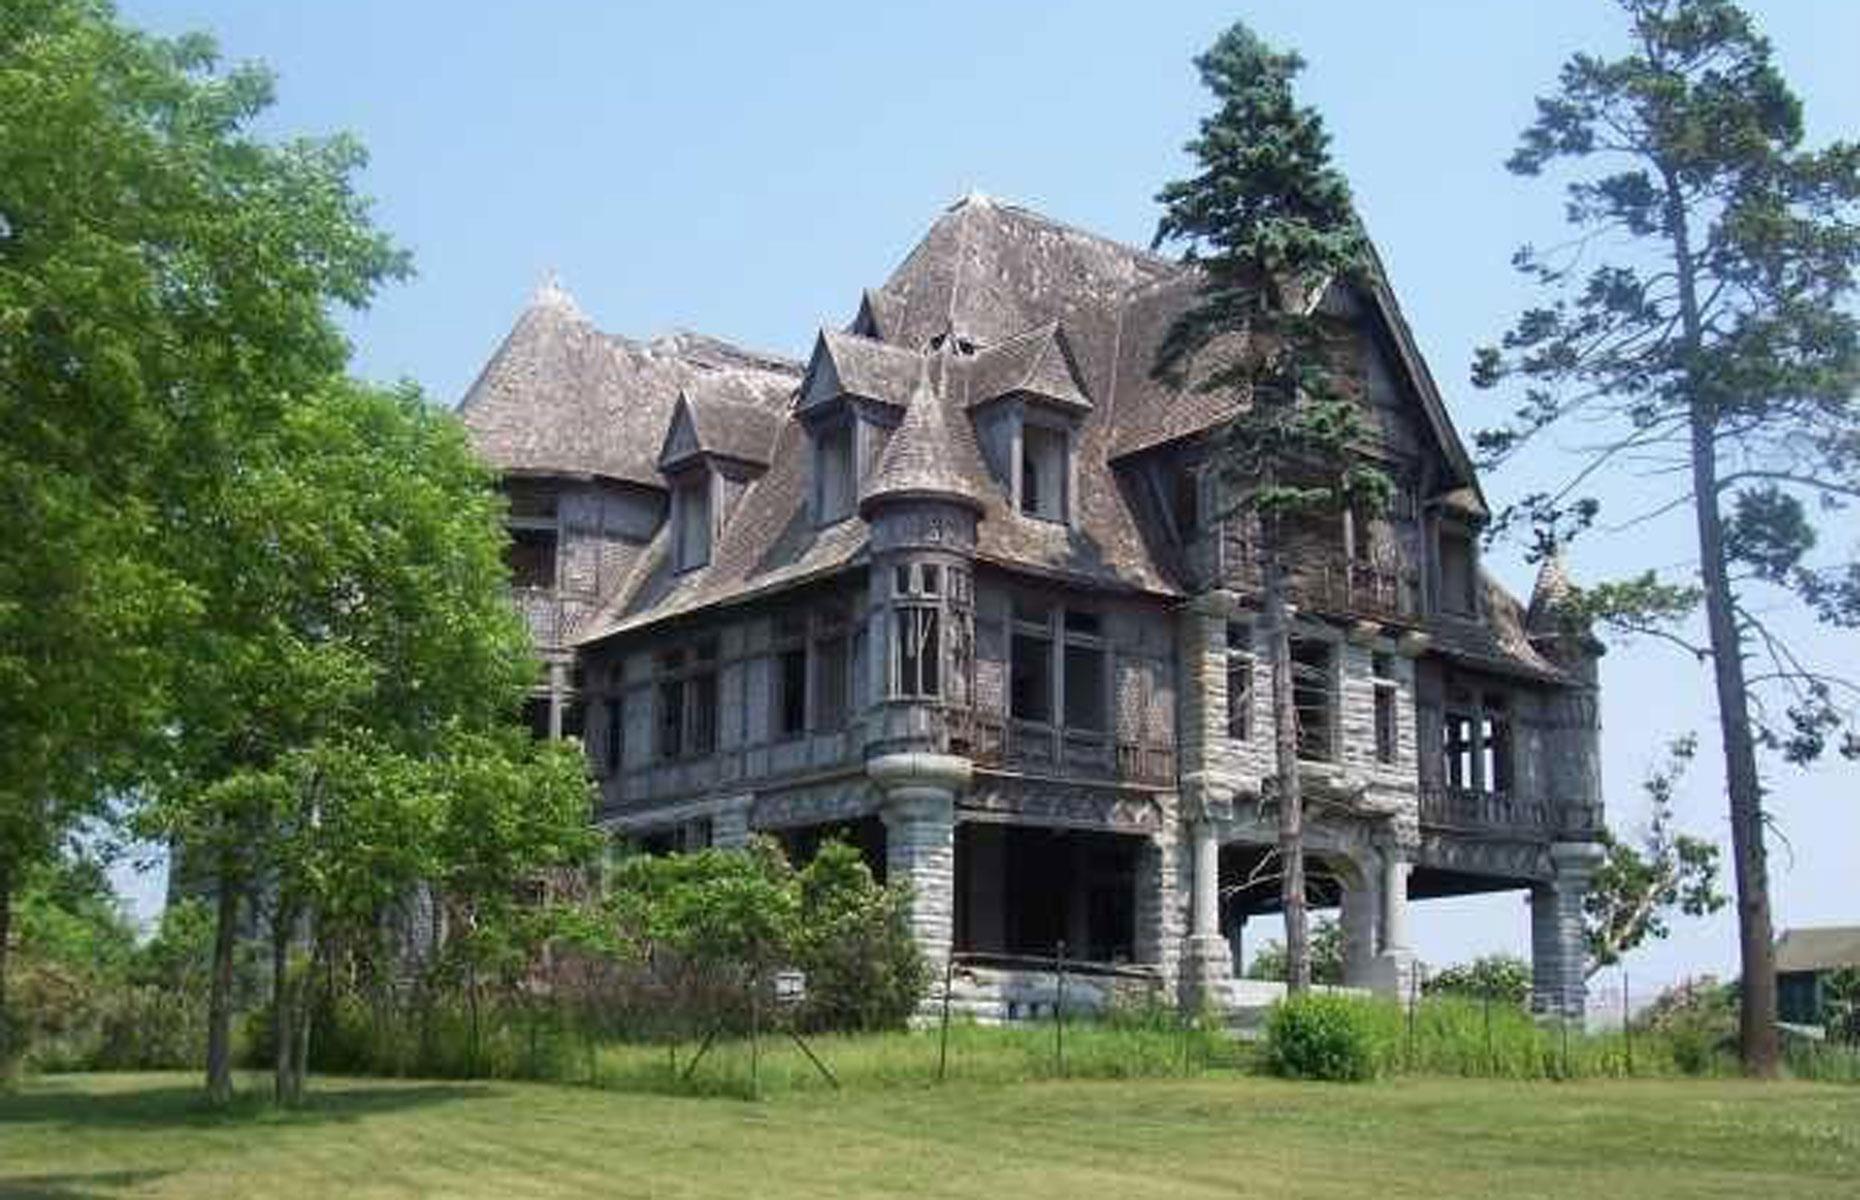 Carleton Island Villa, Cape Vincent, New York